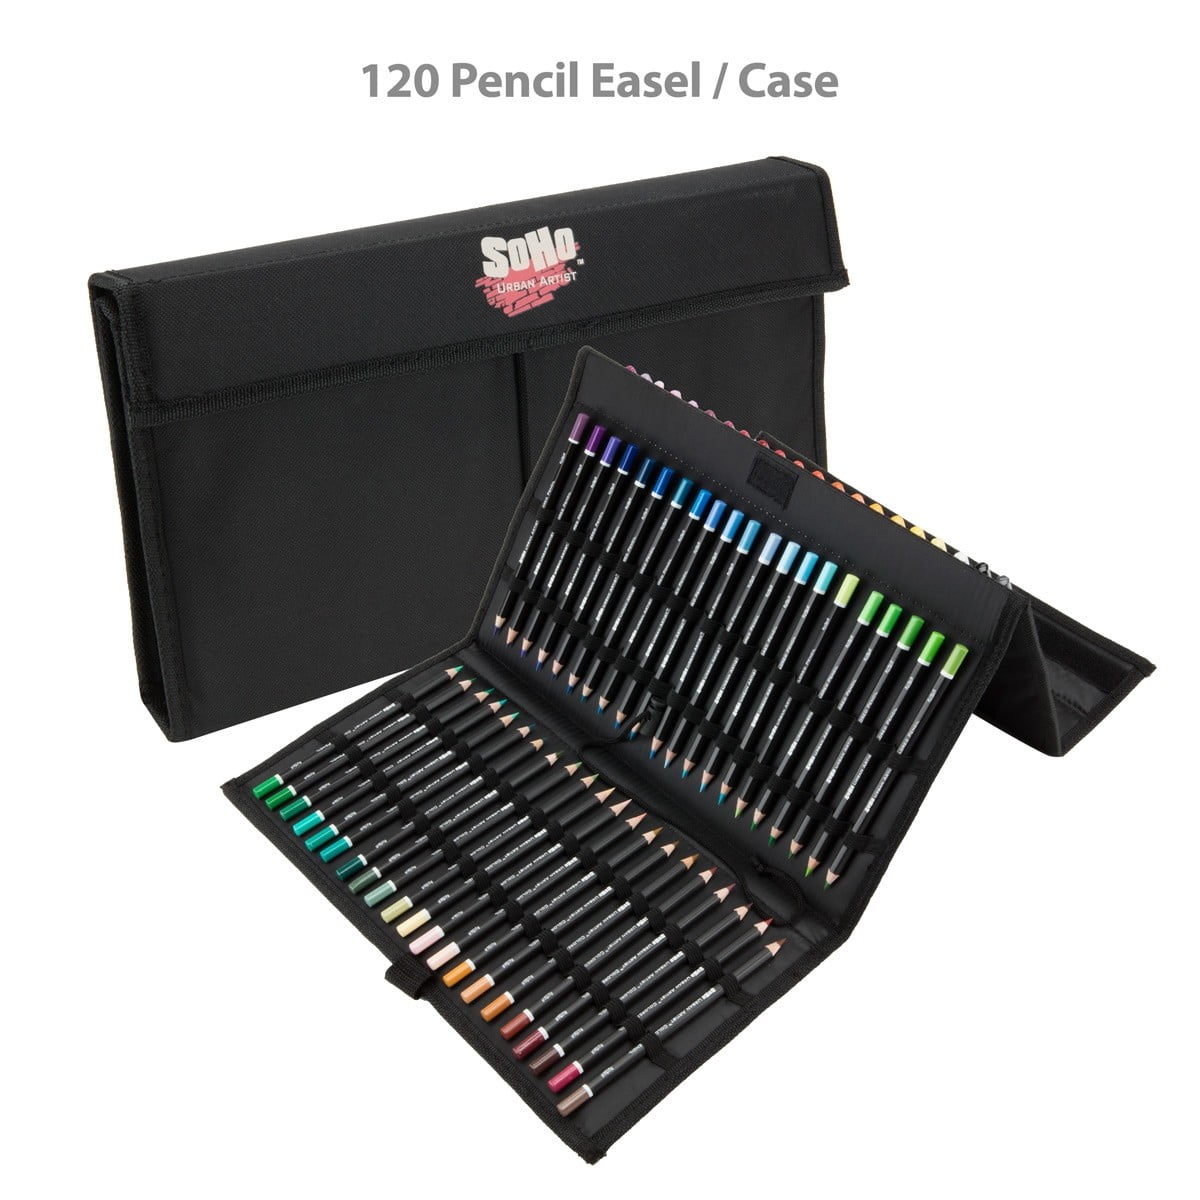 Global : Leather Black Folding Color Pencil Case Holds 120